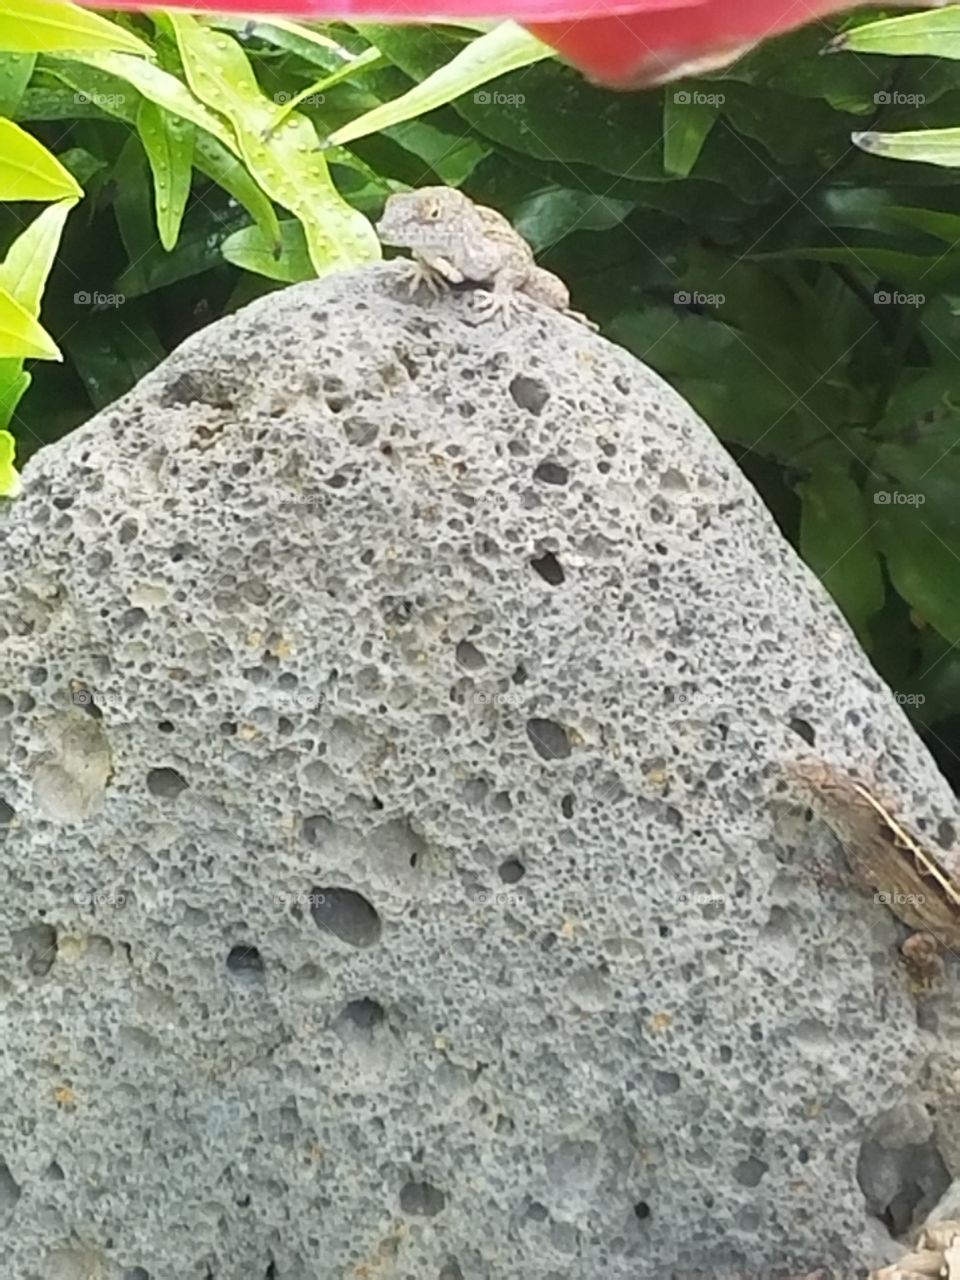 Geckos pose on rock